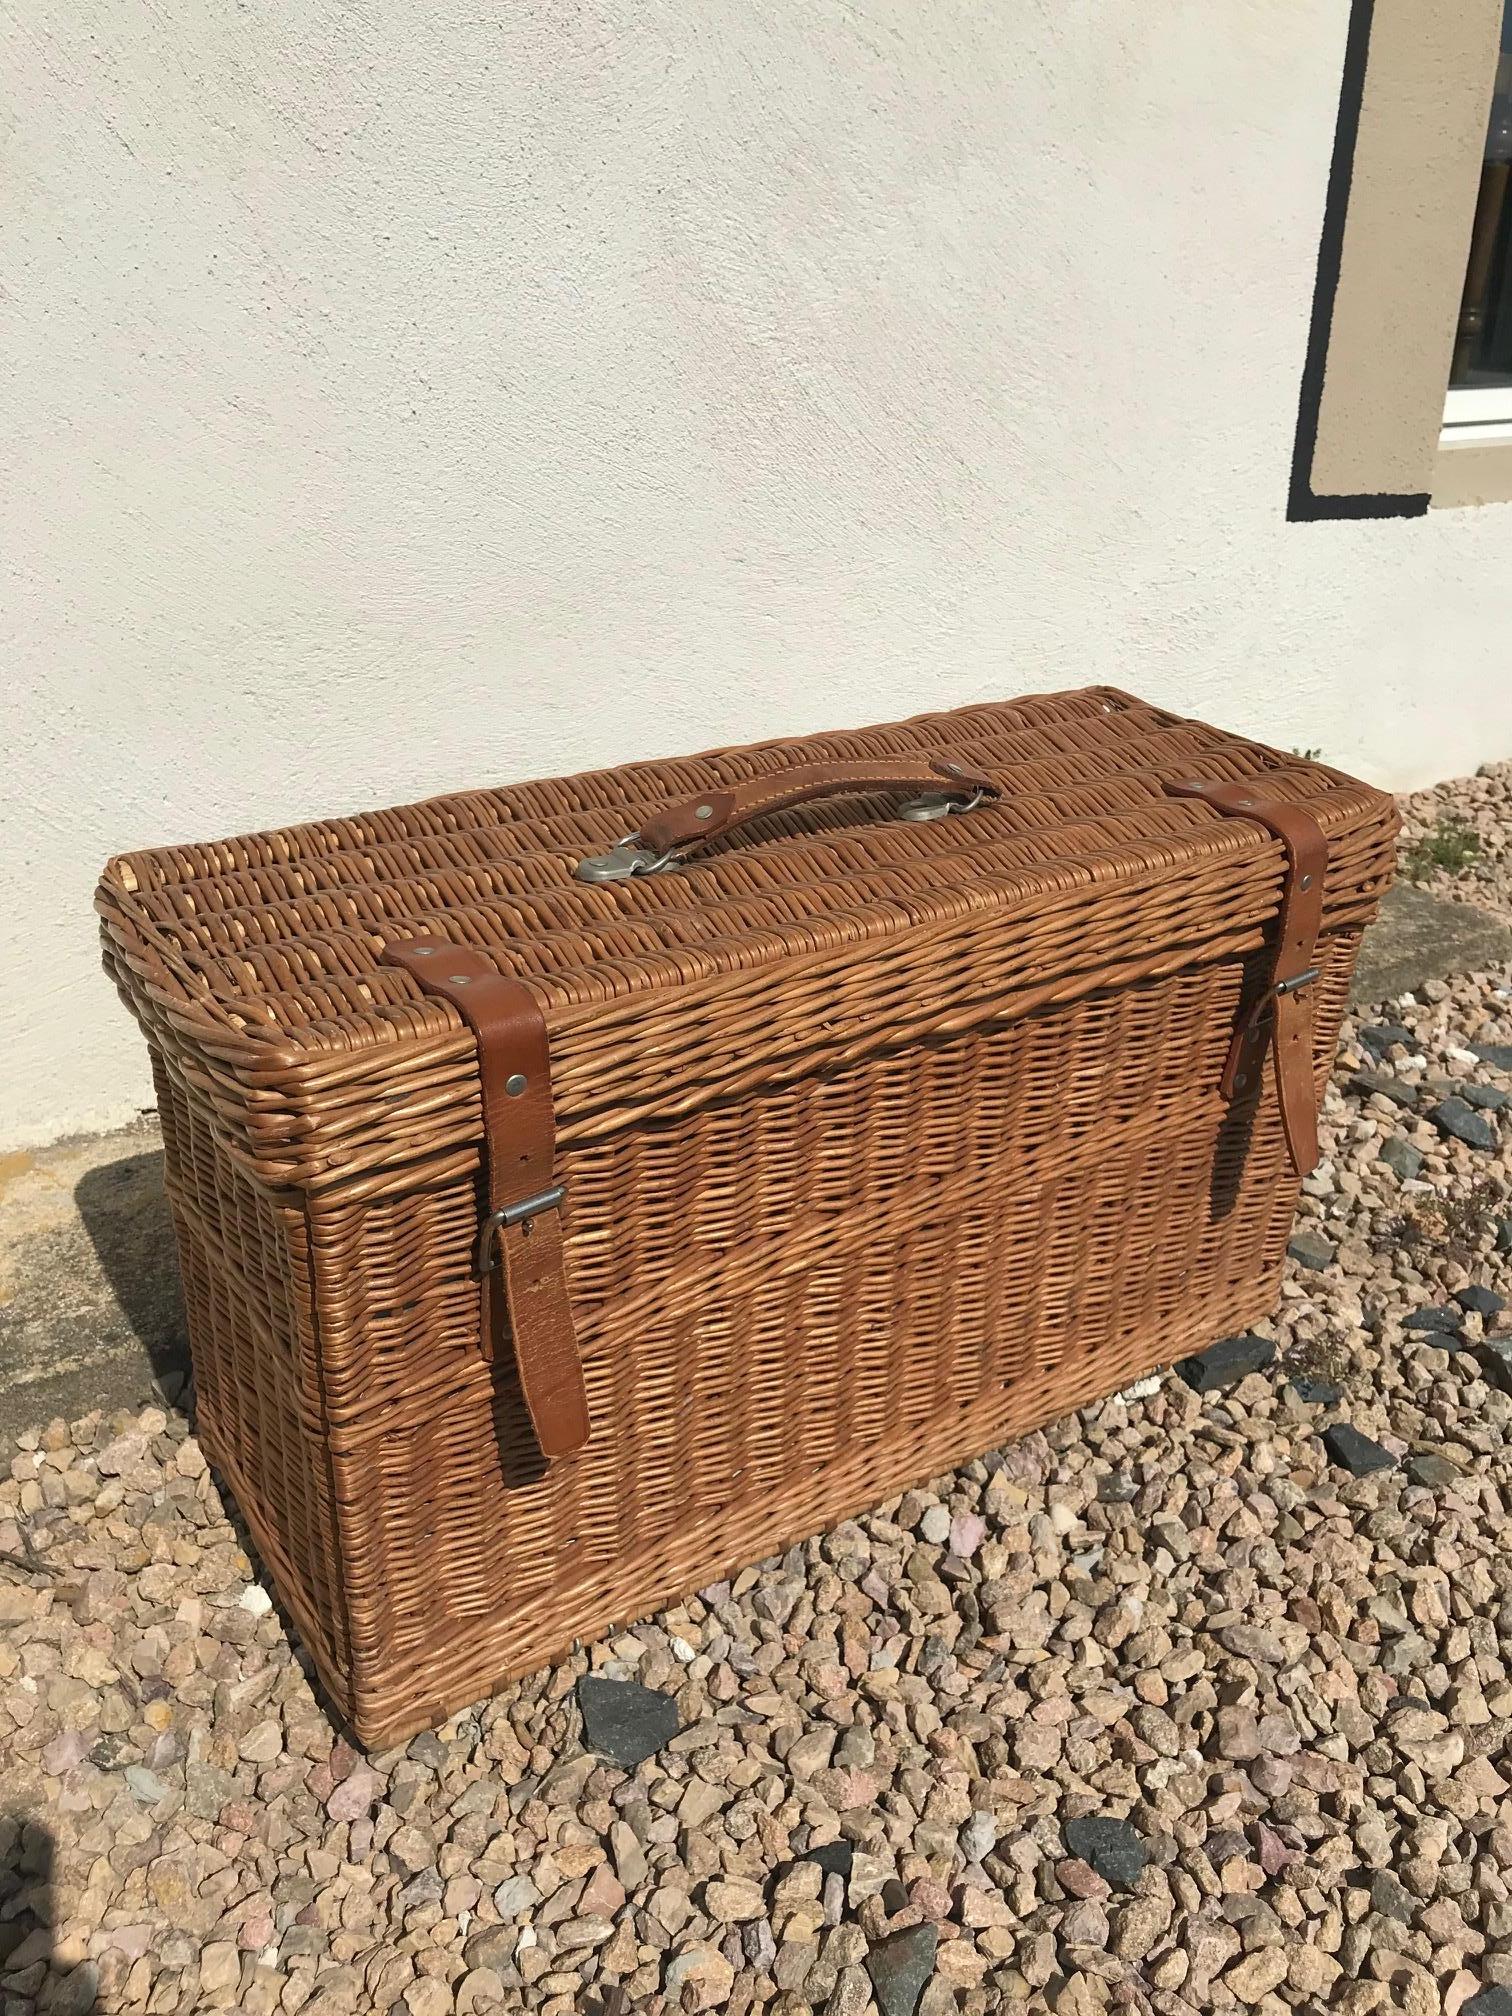 1950s picnic basket